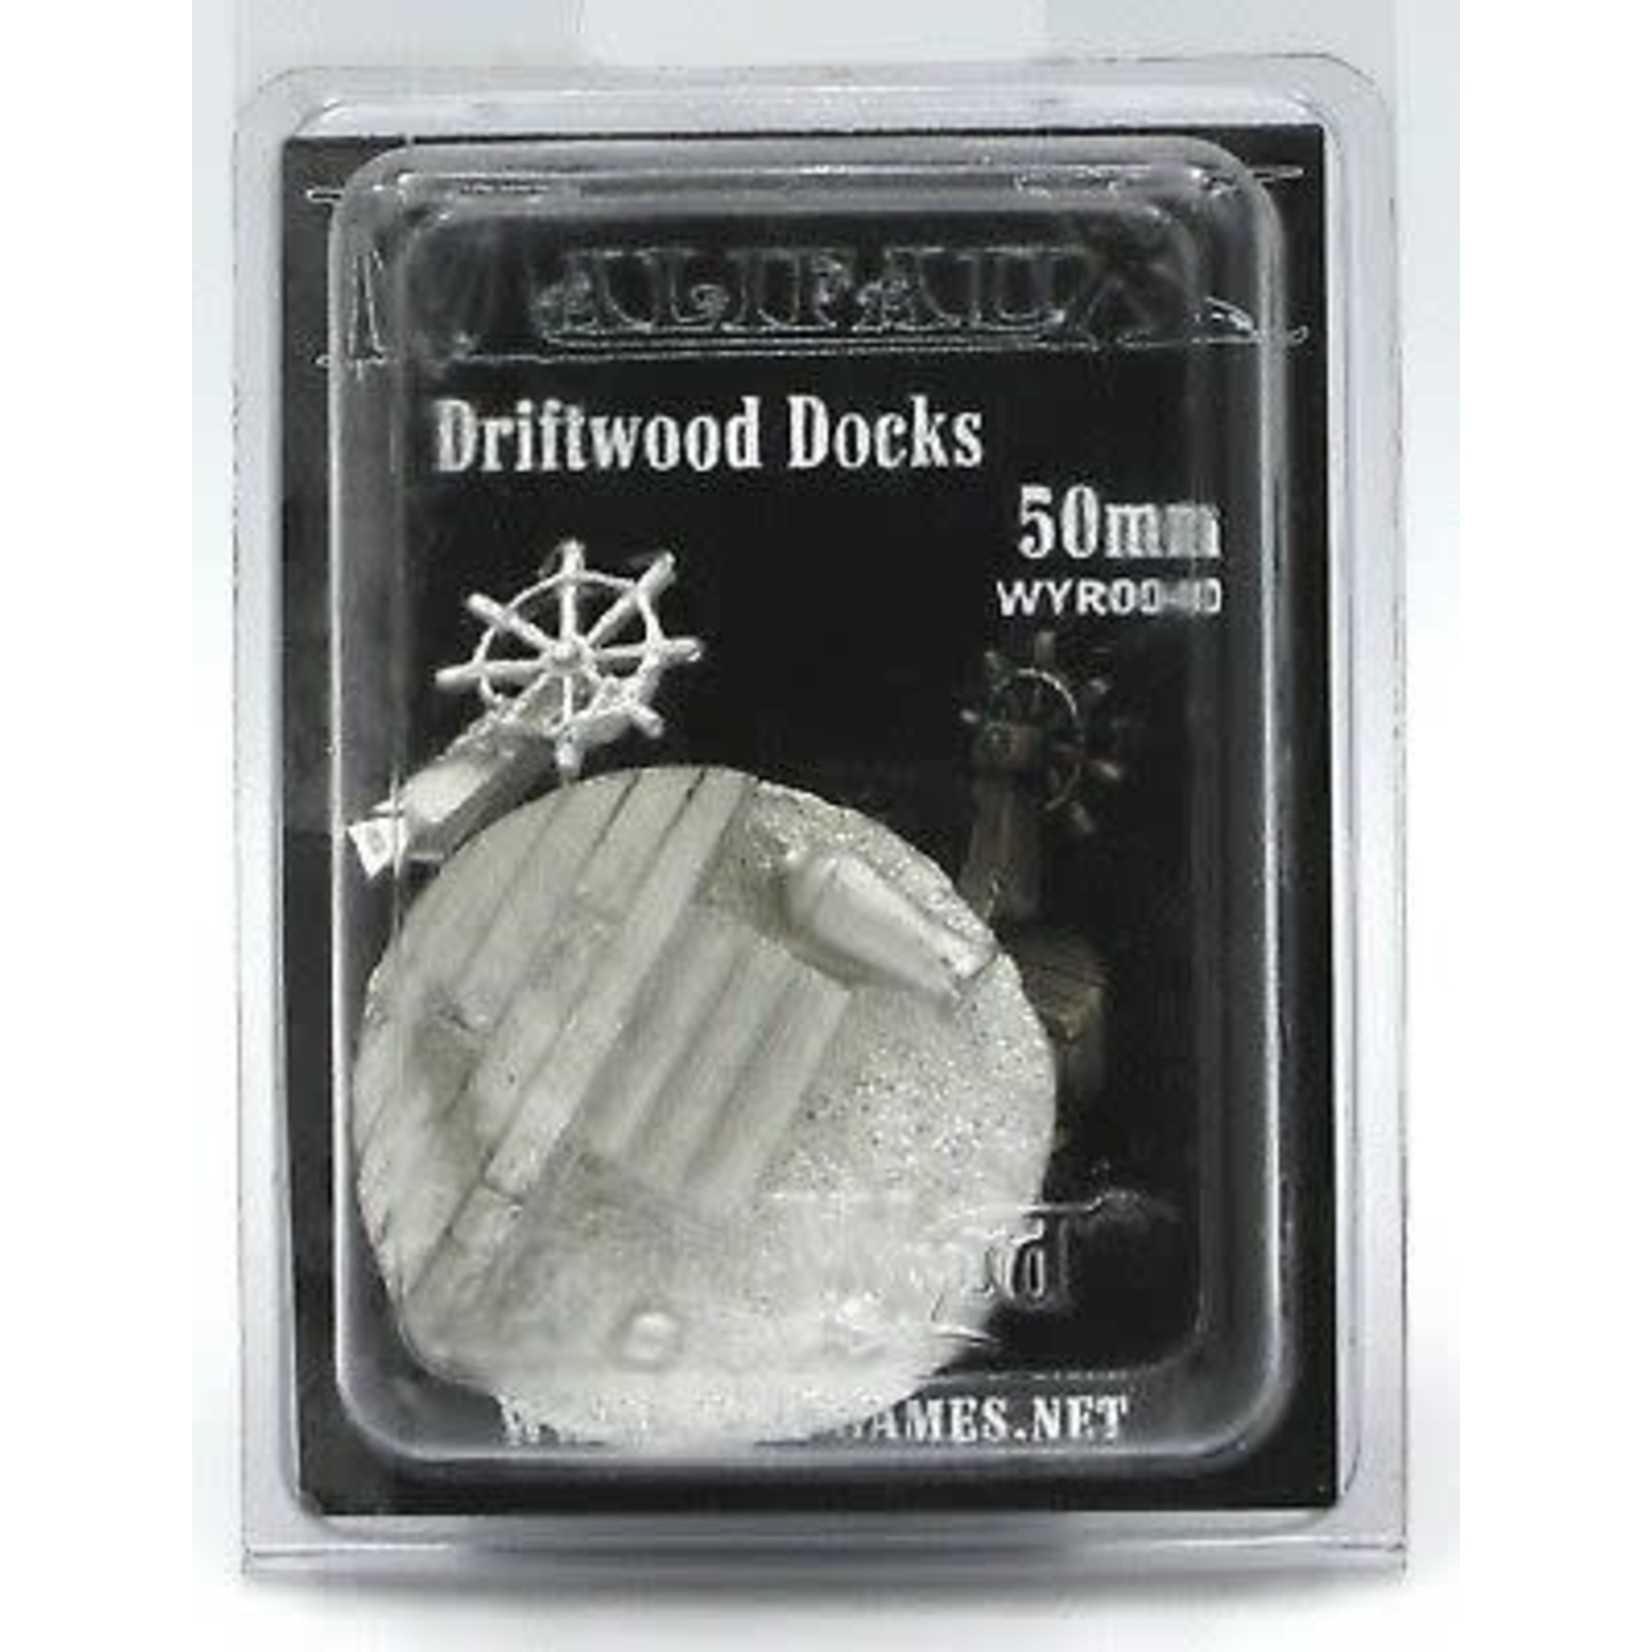 Wyrd Malifaux Driftwood Docks Bases 50mm (1) unpainted